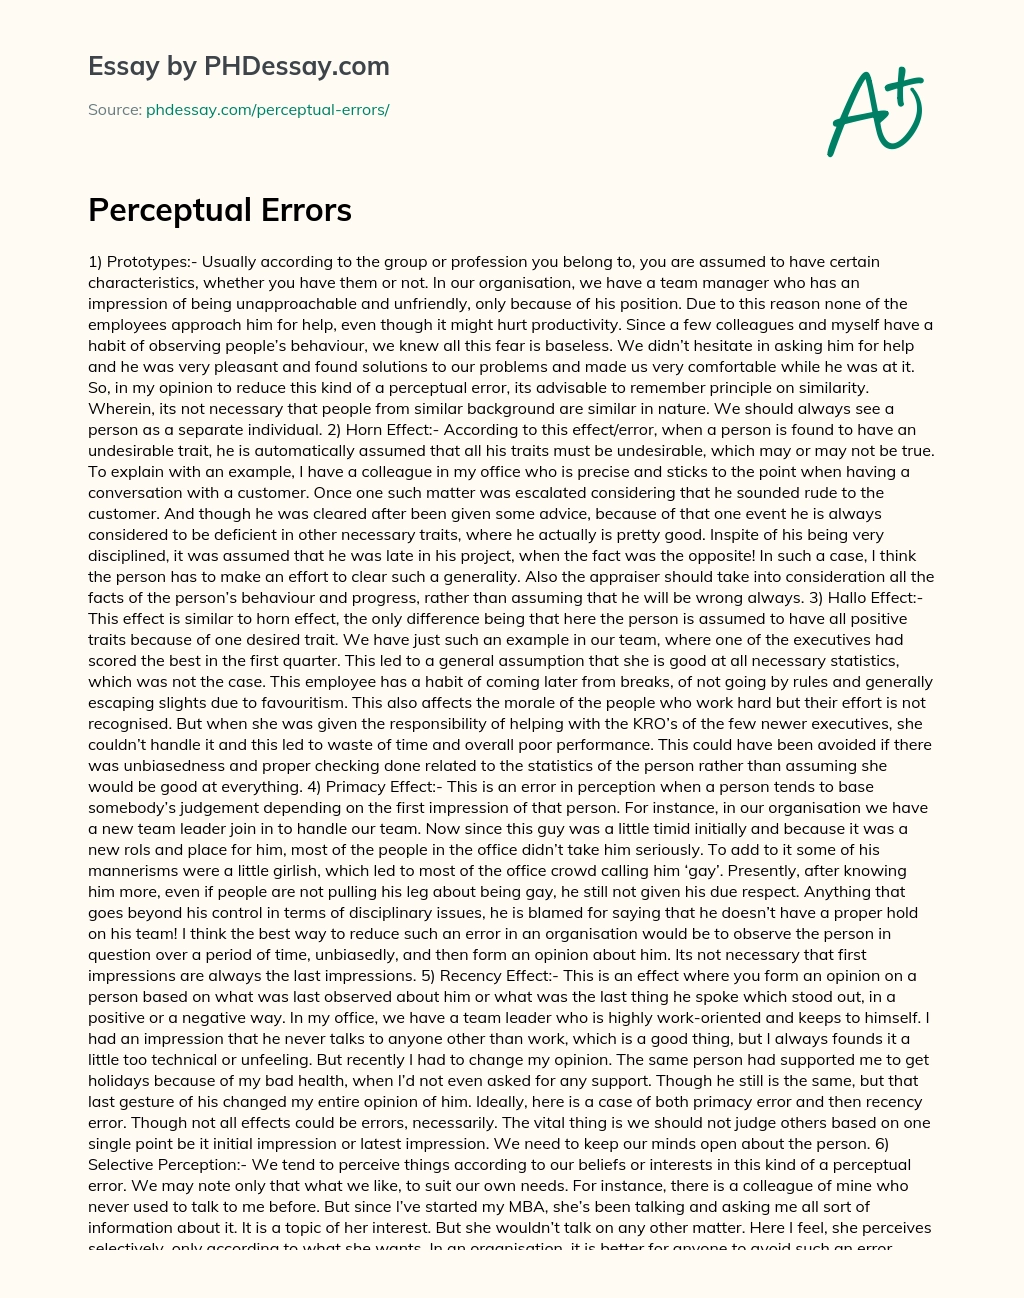 Perceptual Errors Effects essay